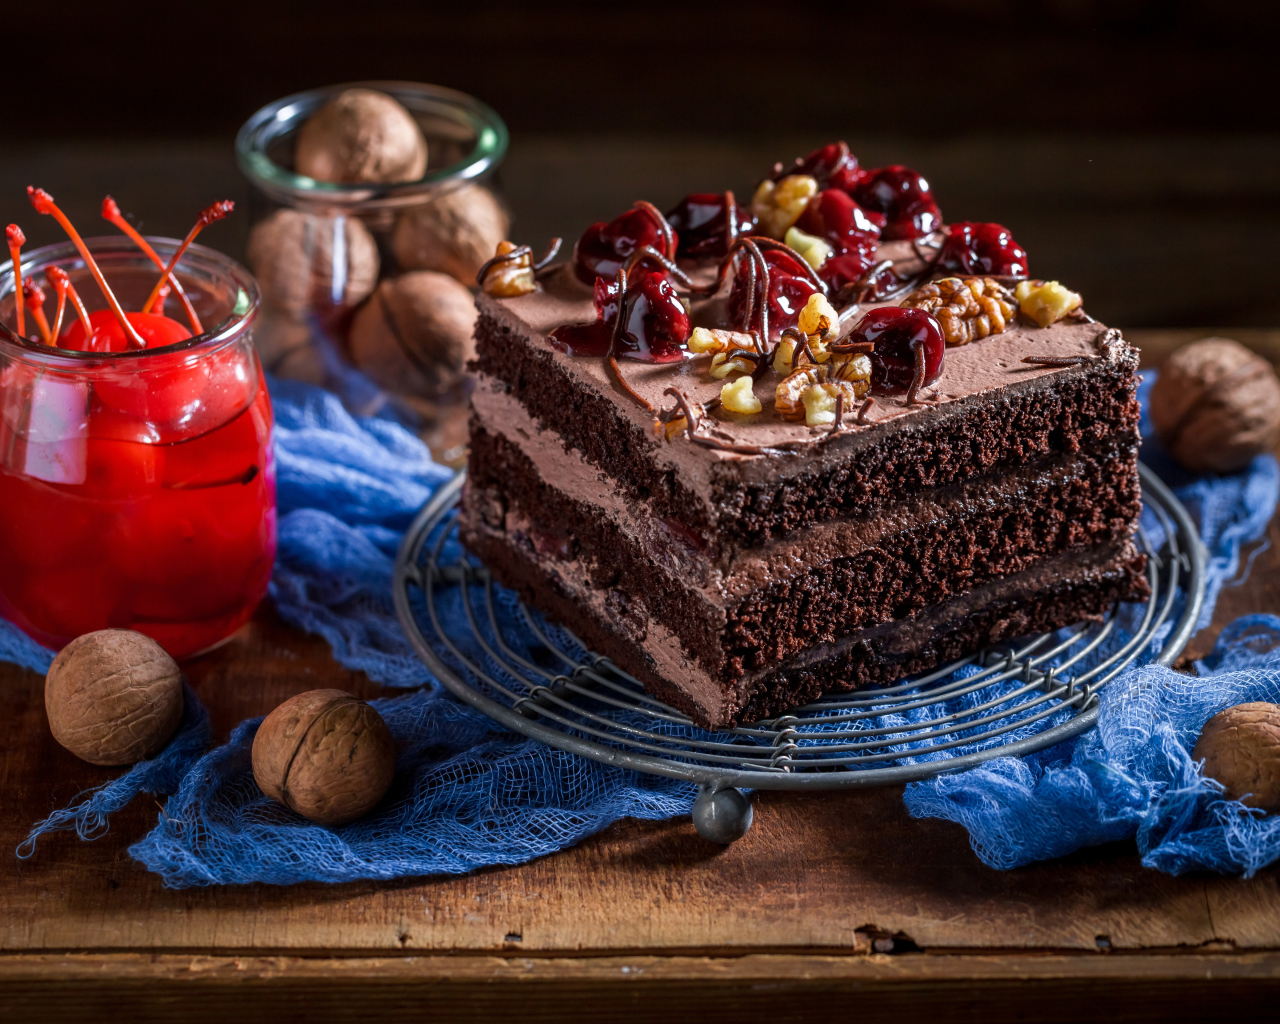 Кусок шоколадного торта на столе с вишнями и грецкими орехами